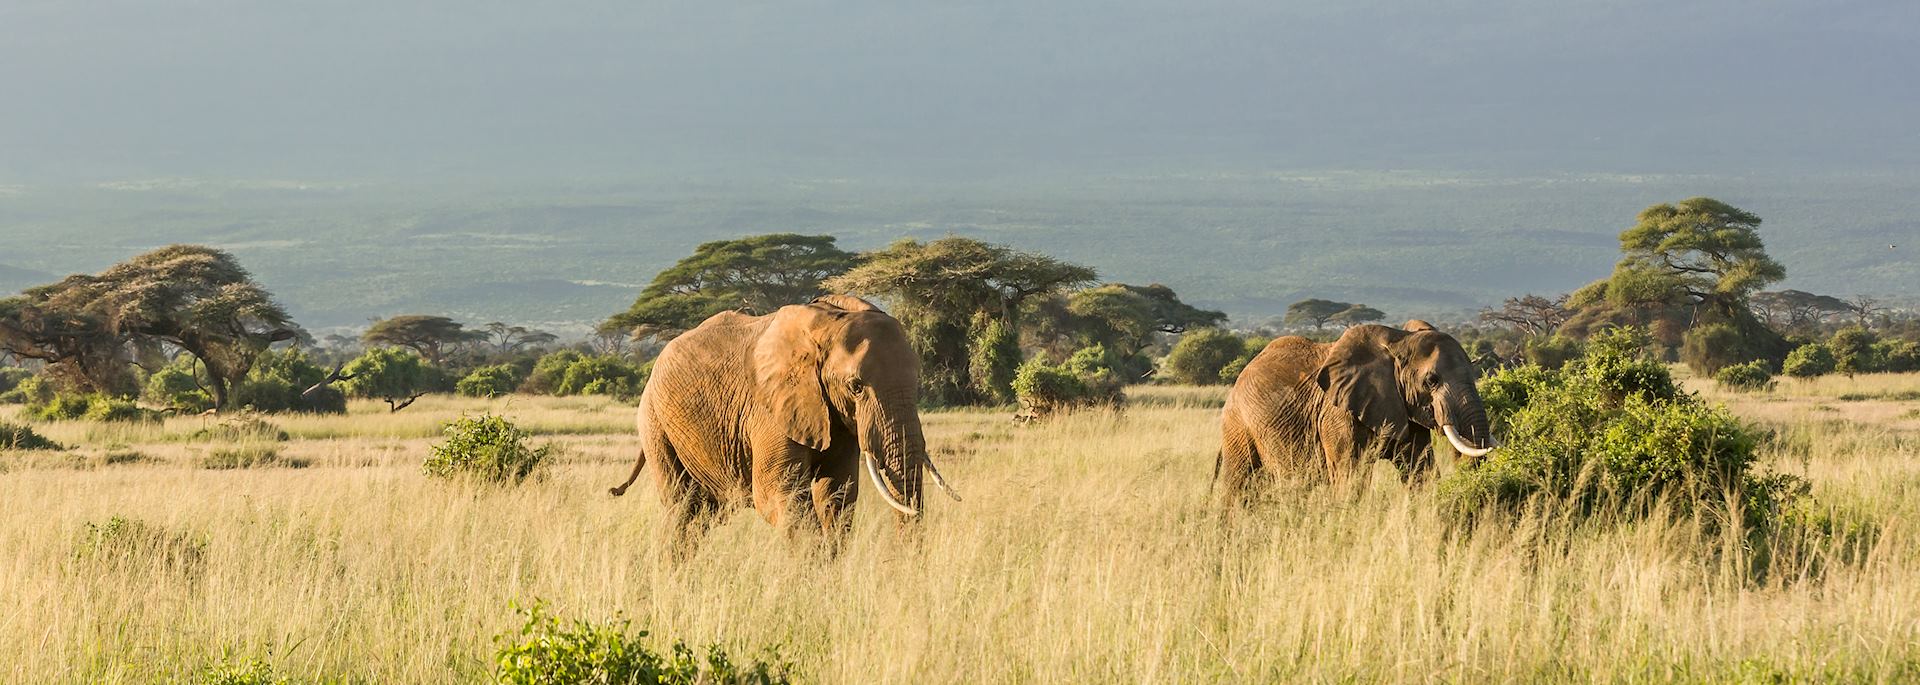 Elephant near Mt Kilimanjaro